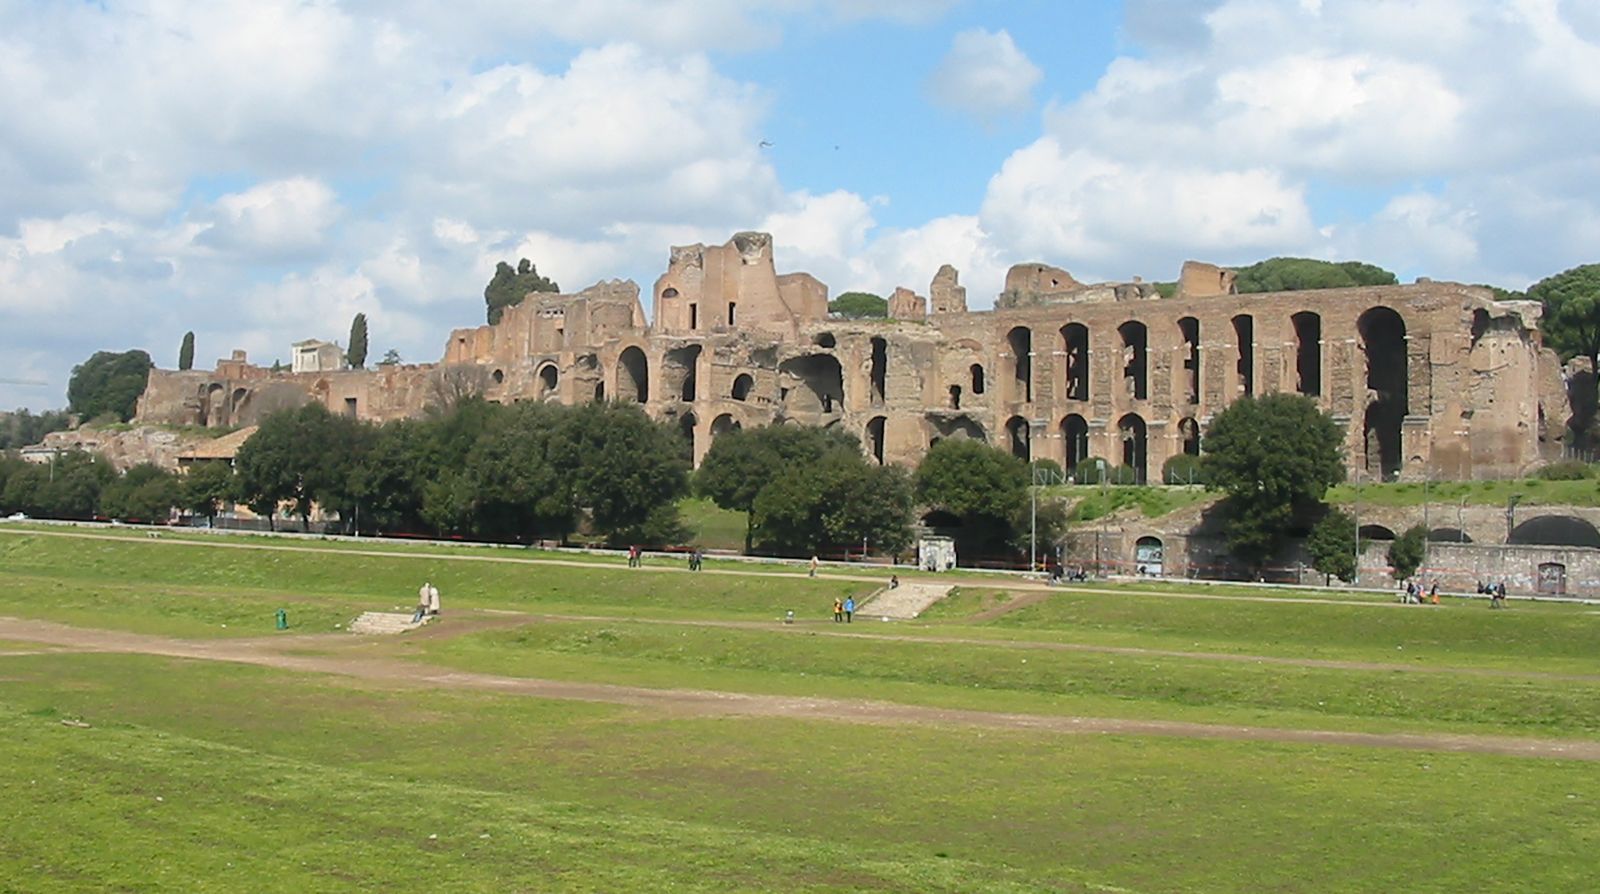 Roman Backgrounds